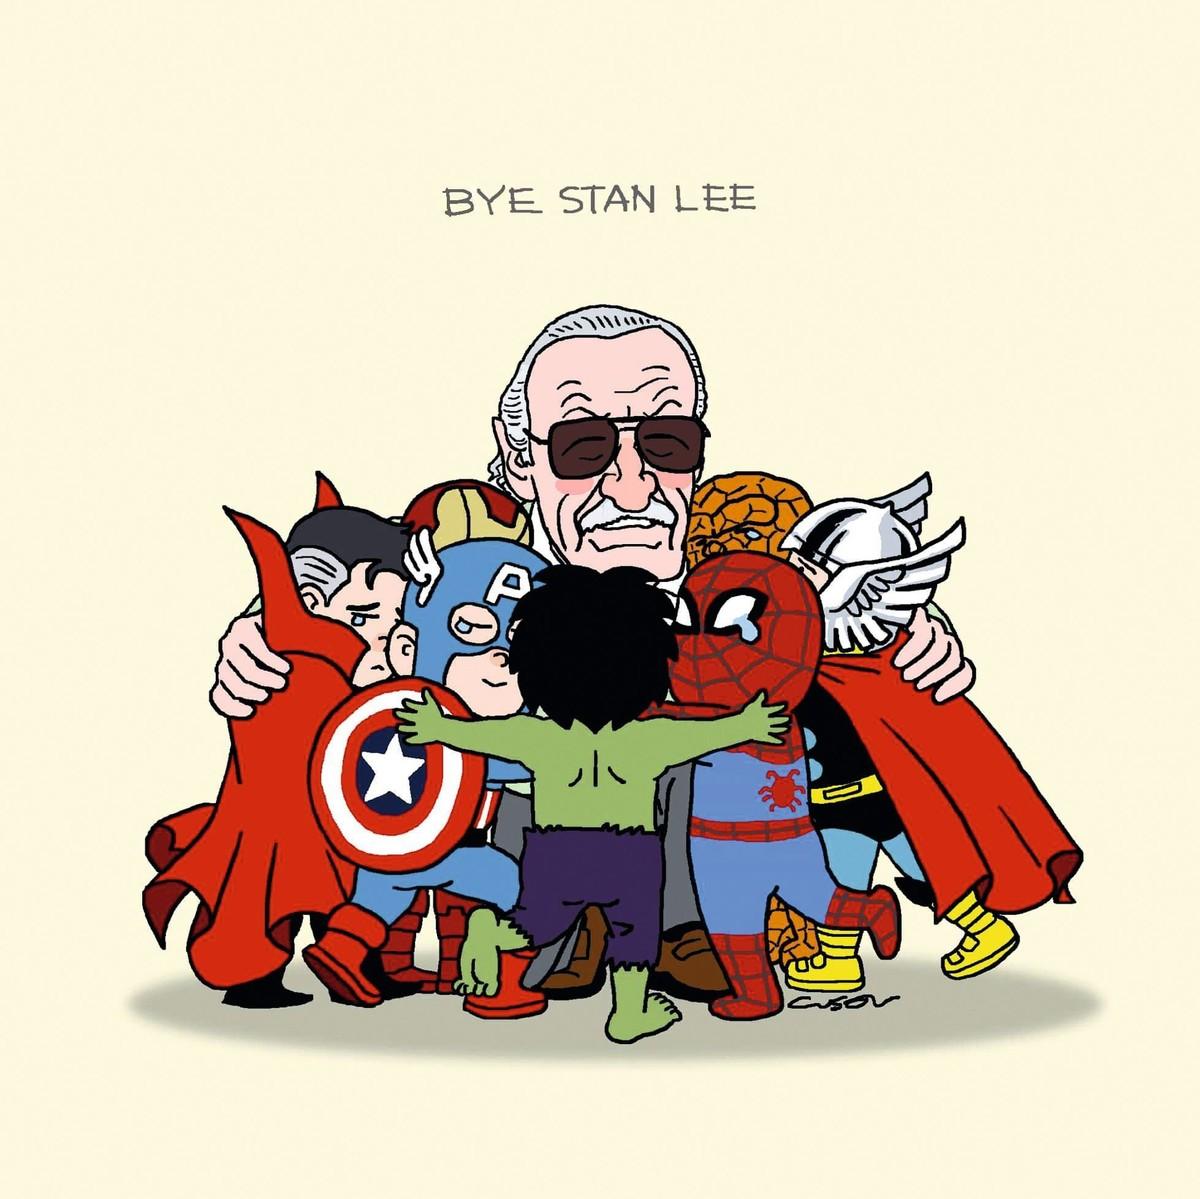 Bye Stan Lee, Cuson Lo, 2018